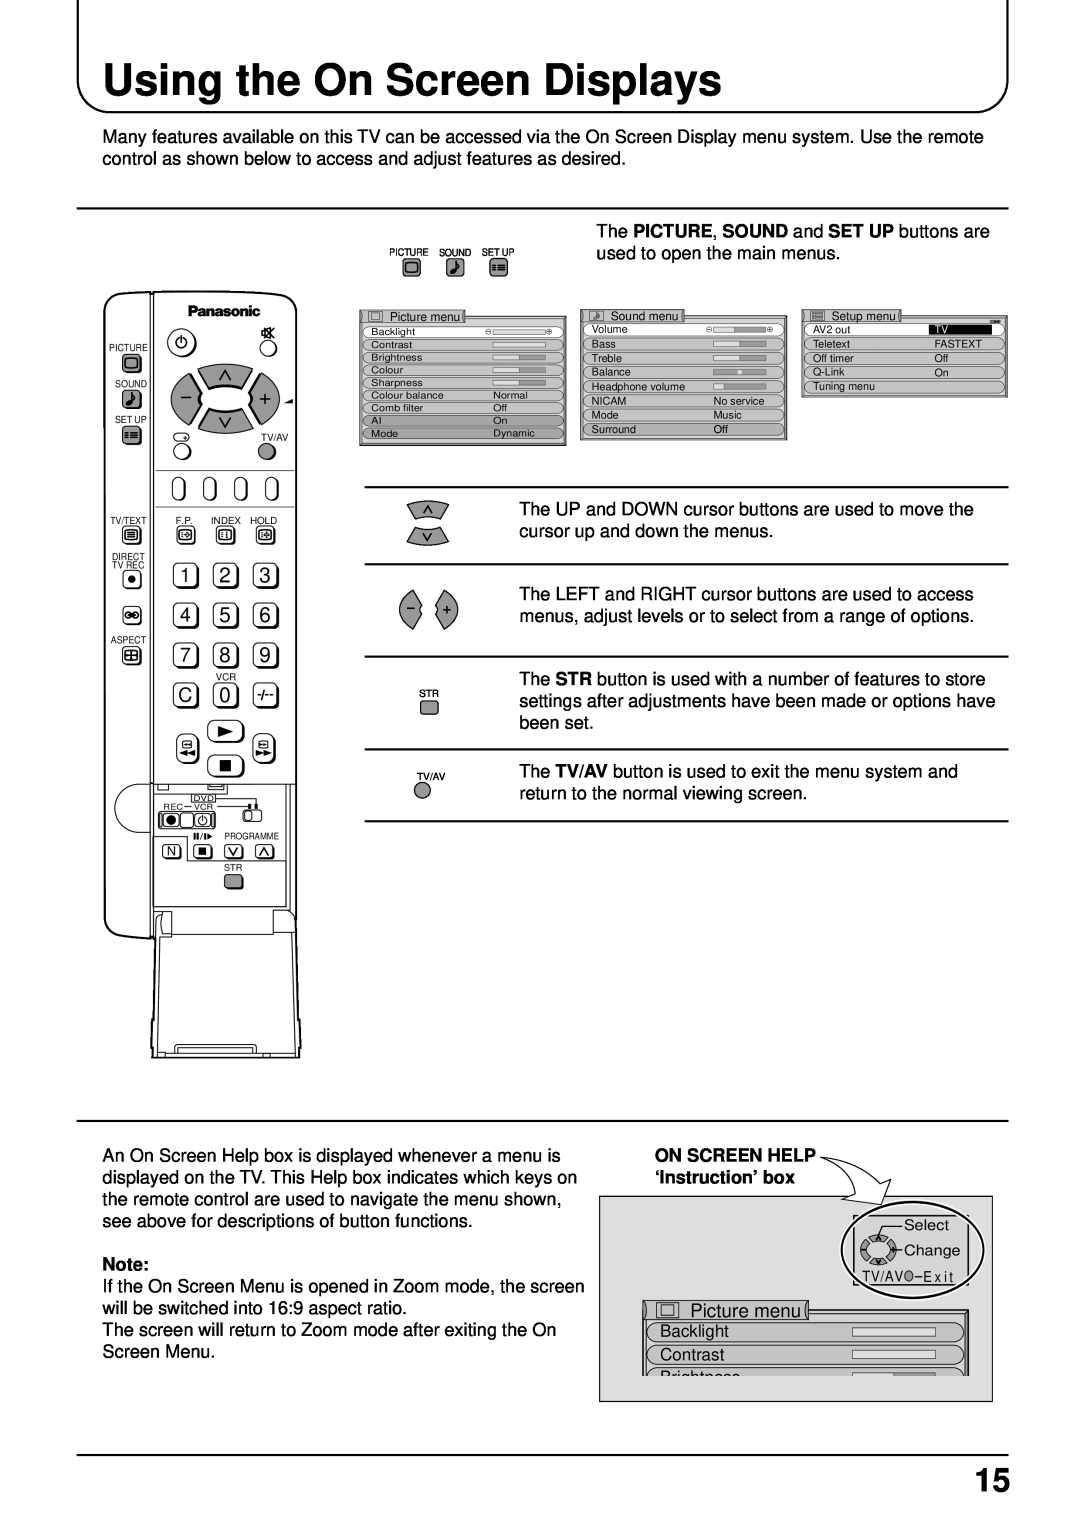 Panasonic TX-22LT2 manual Using the On Screen Displays, 1 2 4 5, ON SCREEN HELP ‘Instruction’ box 